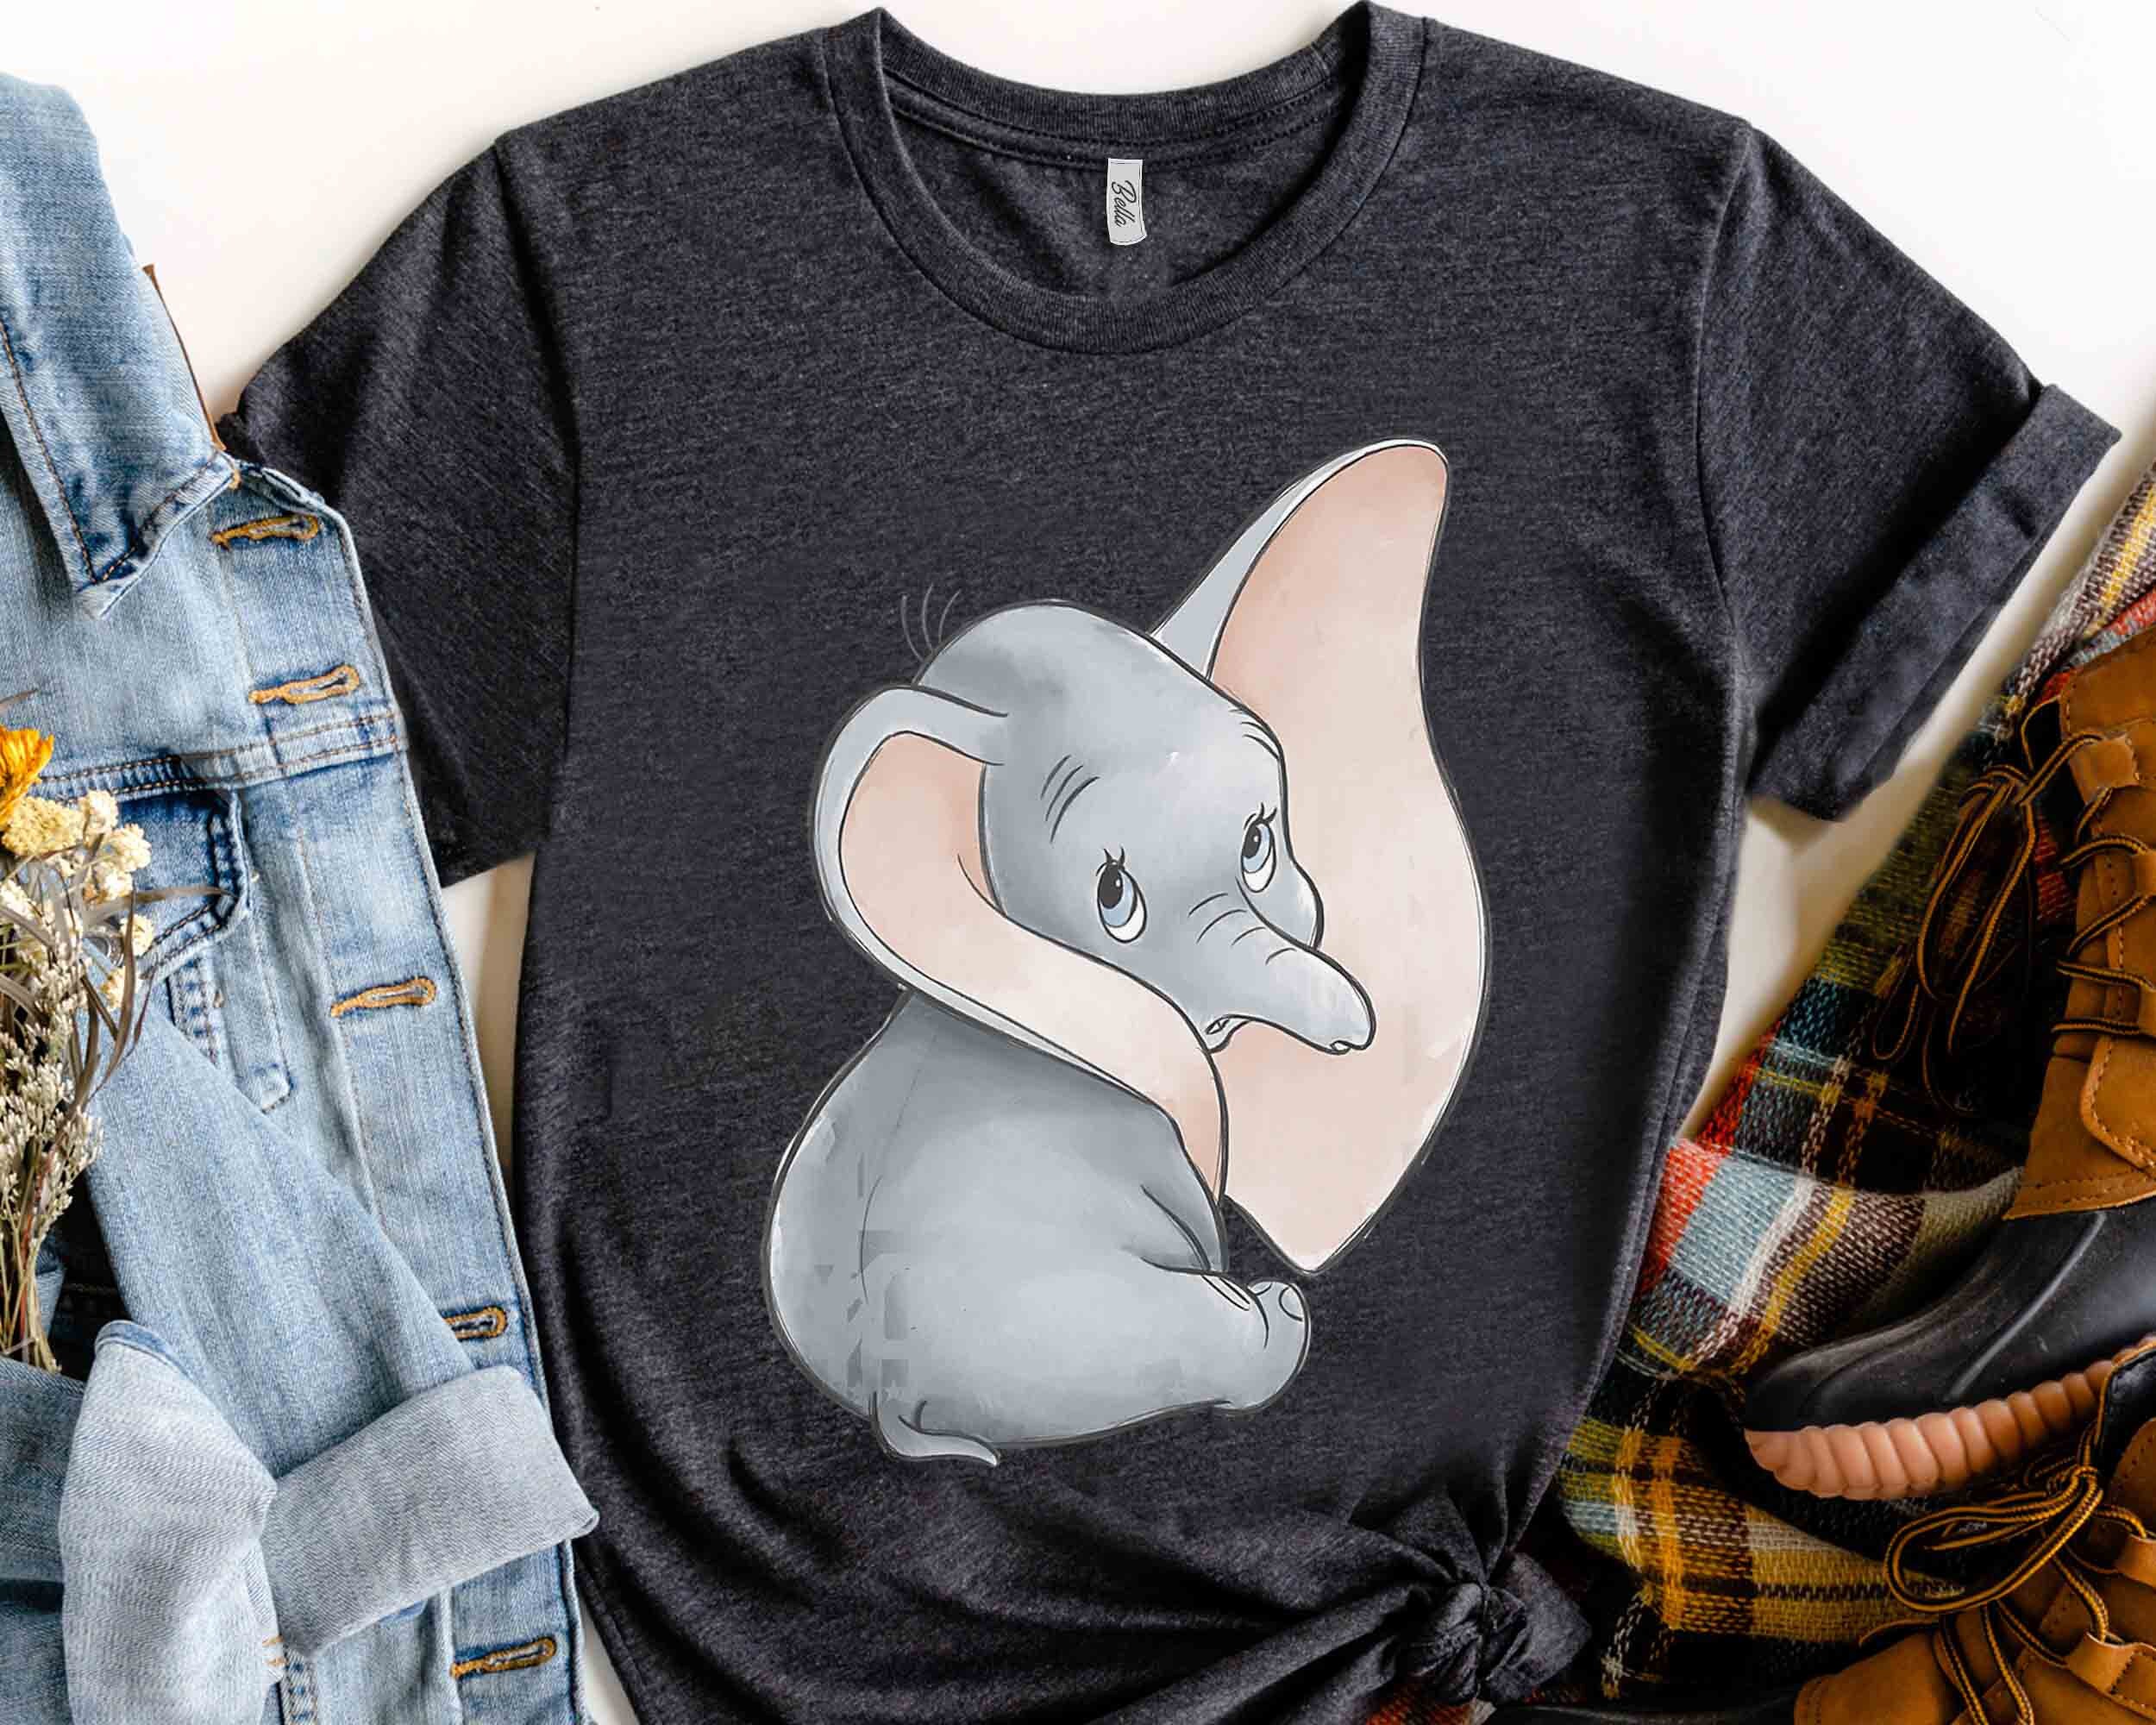 ARTESANIA CERDA Women's Disney Dumbo Sweatshirt, Grey (Grey 13), M